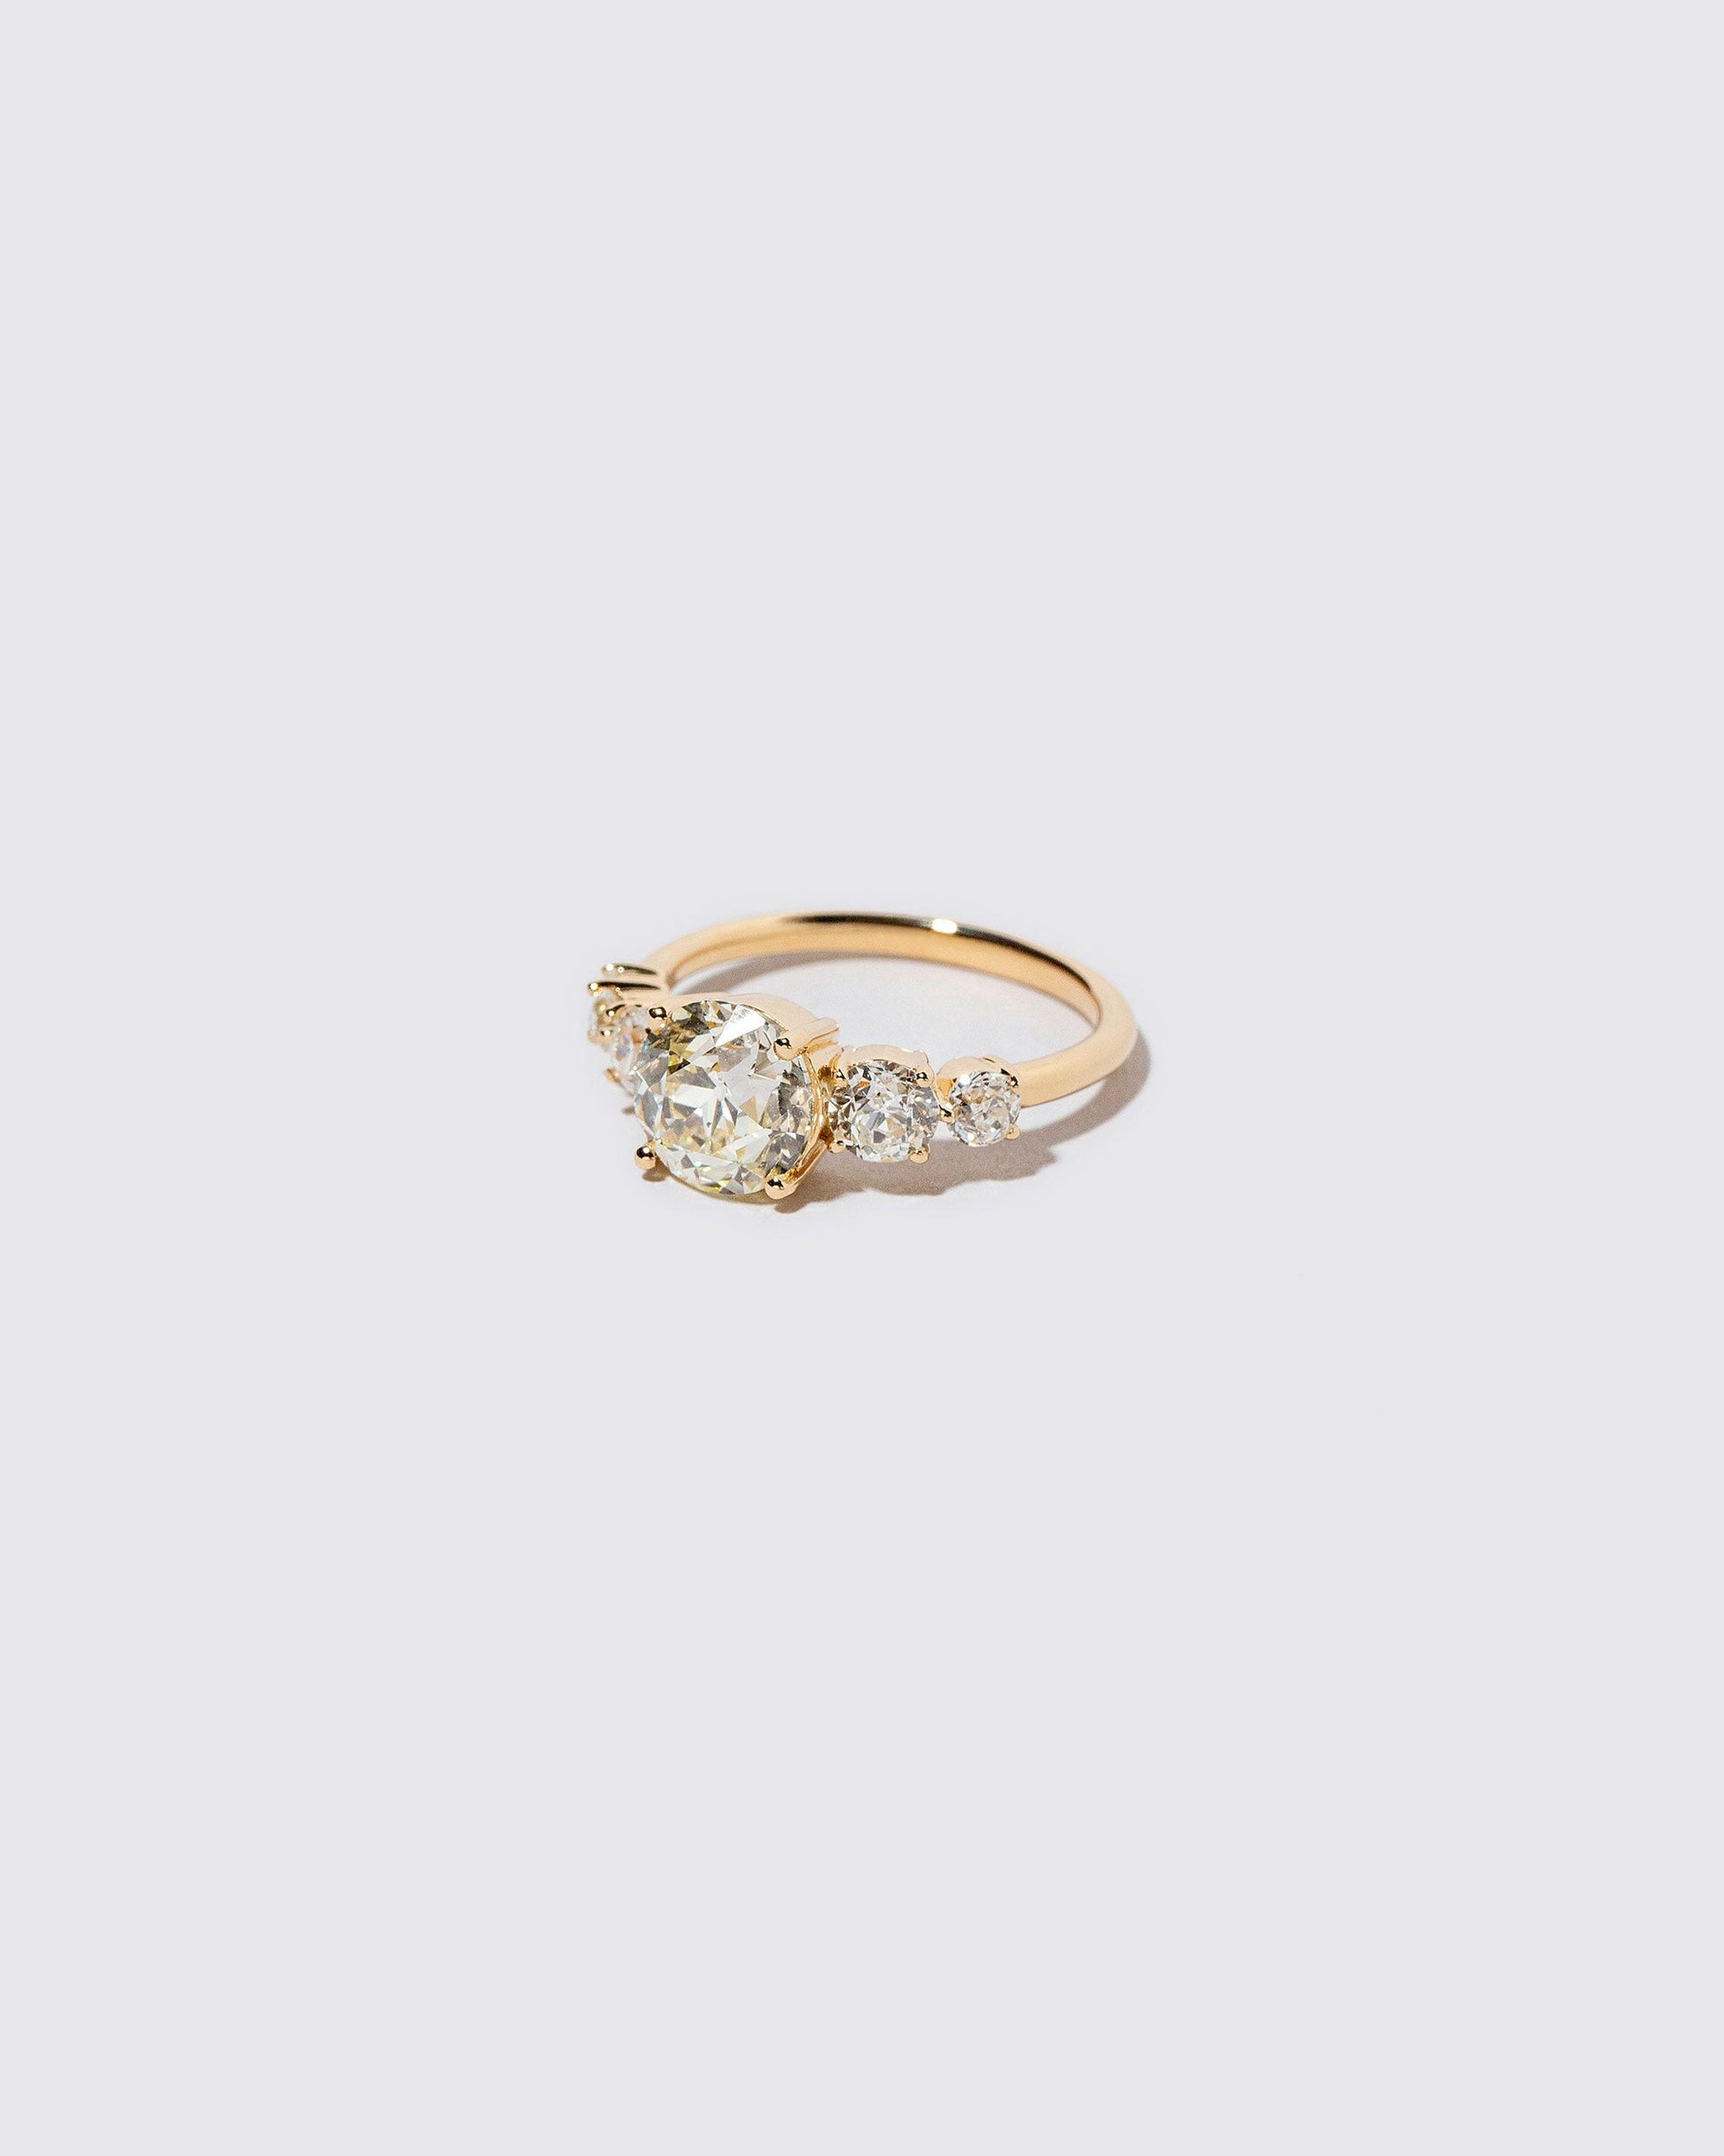 Auriga Ring - White Diamond on light color background.